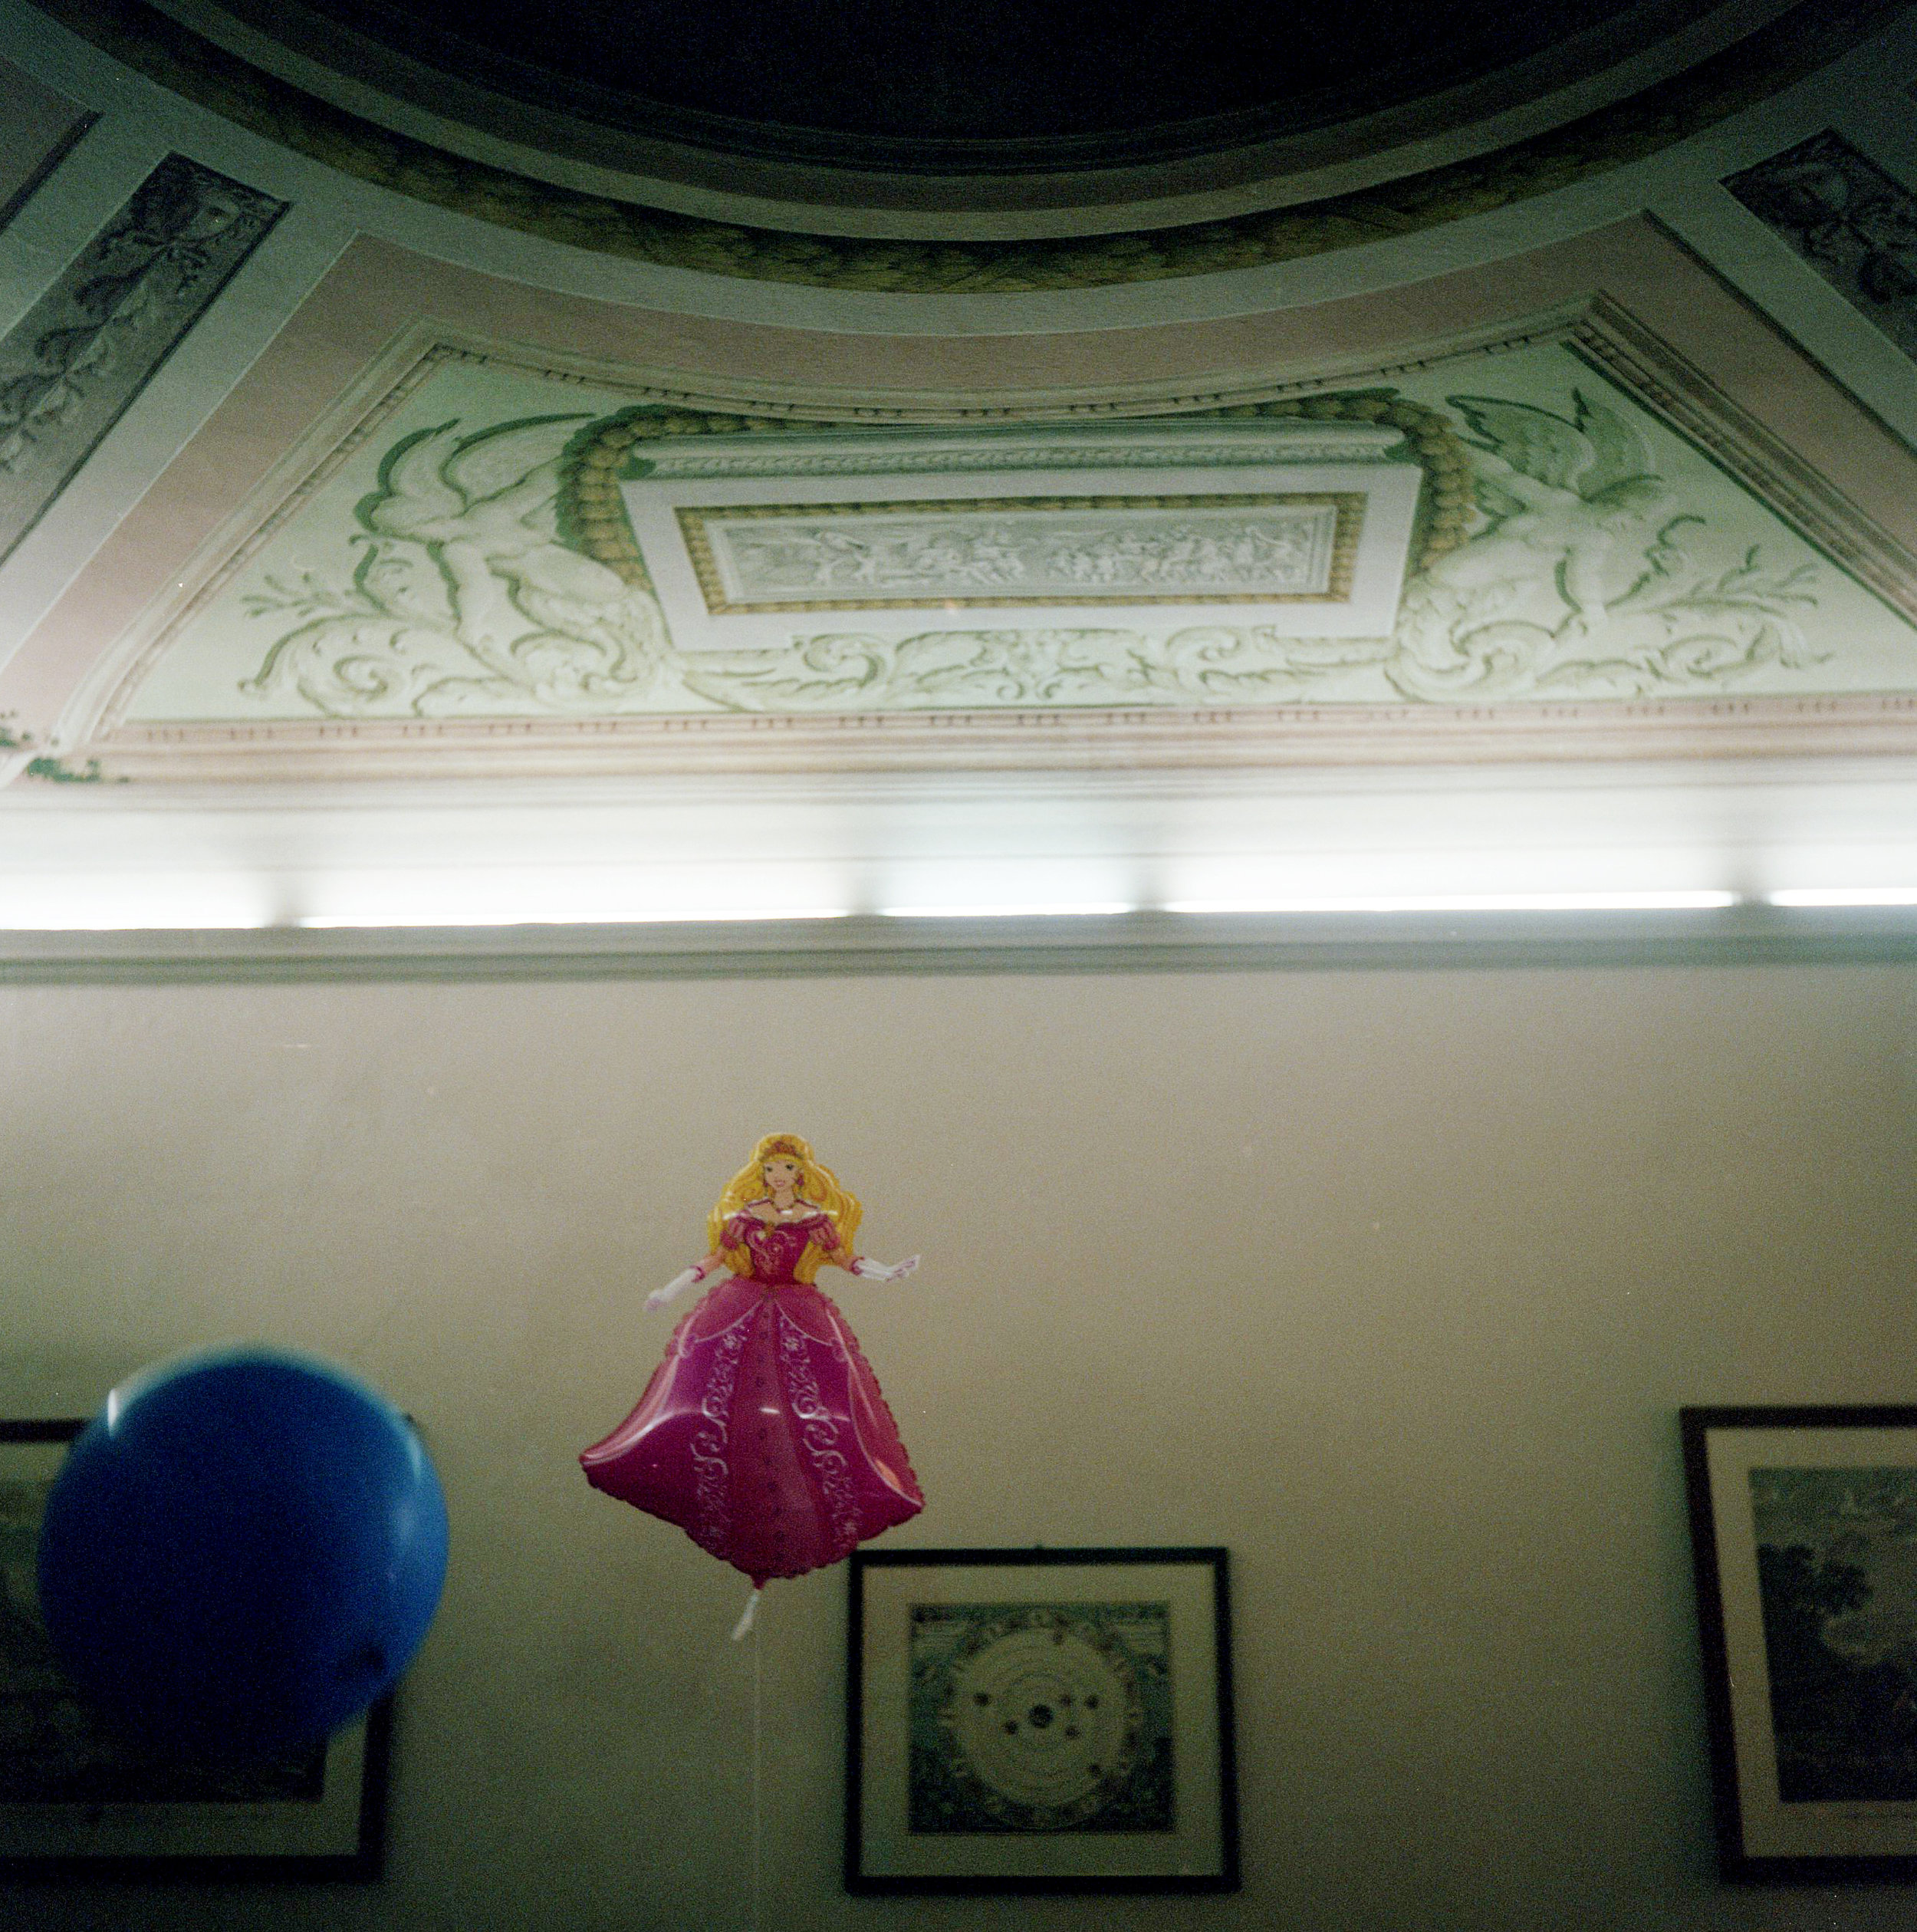  Principessa Balloon with fresco living room ceiling, Cortona, Italy 